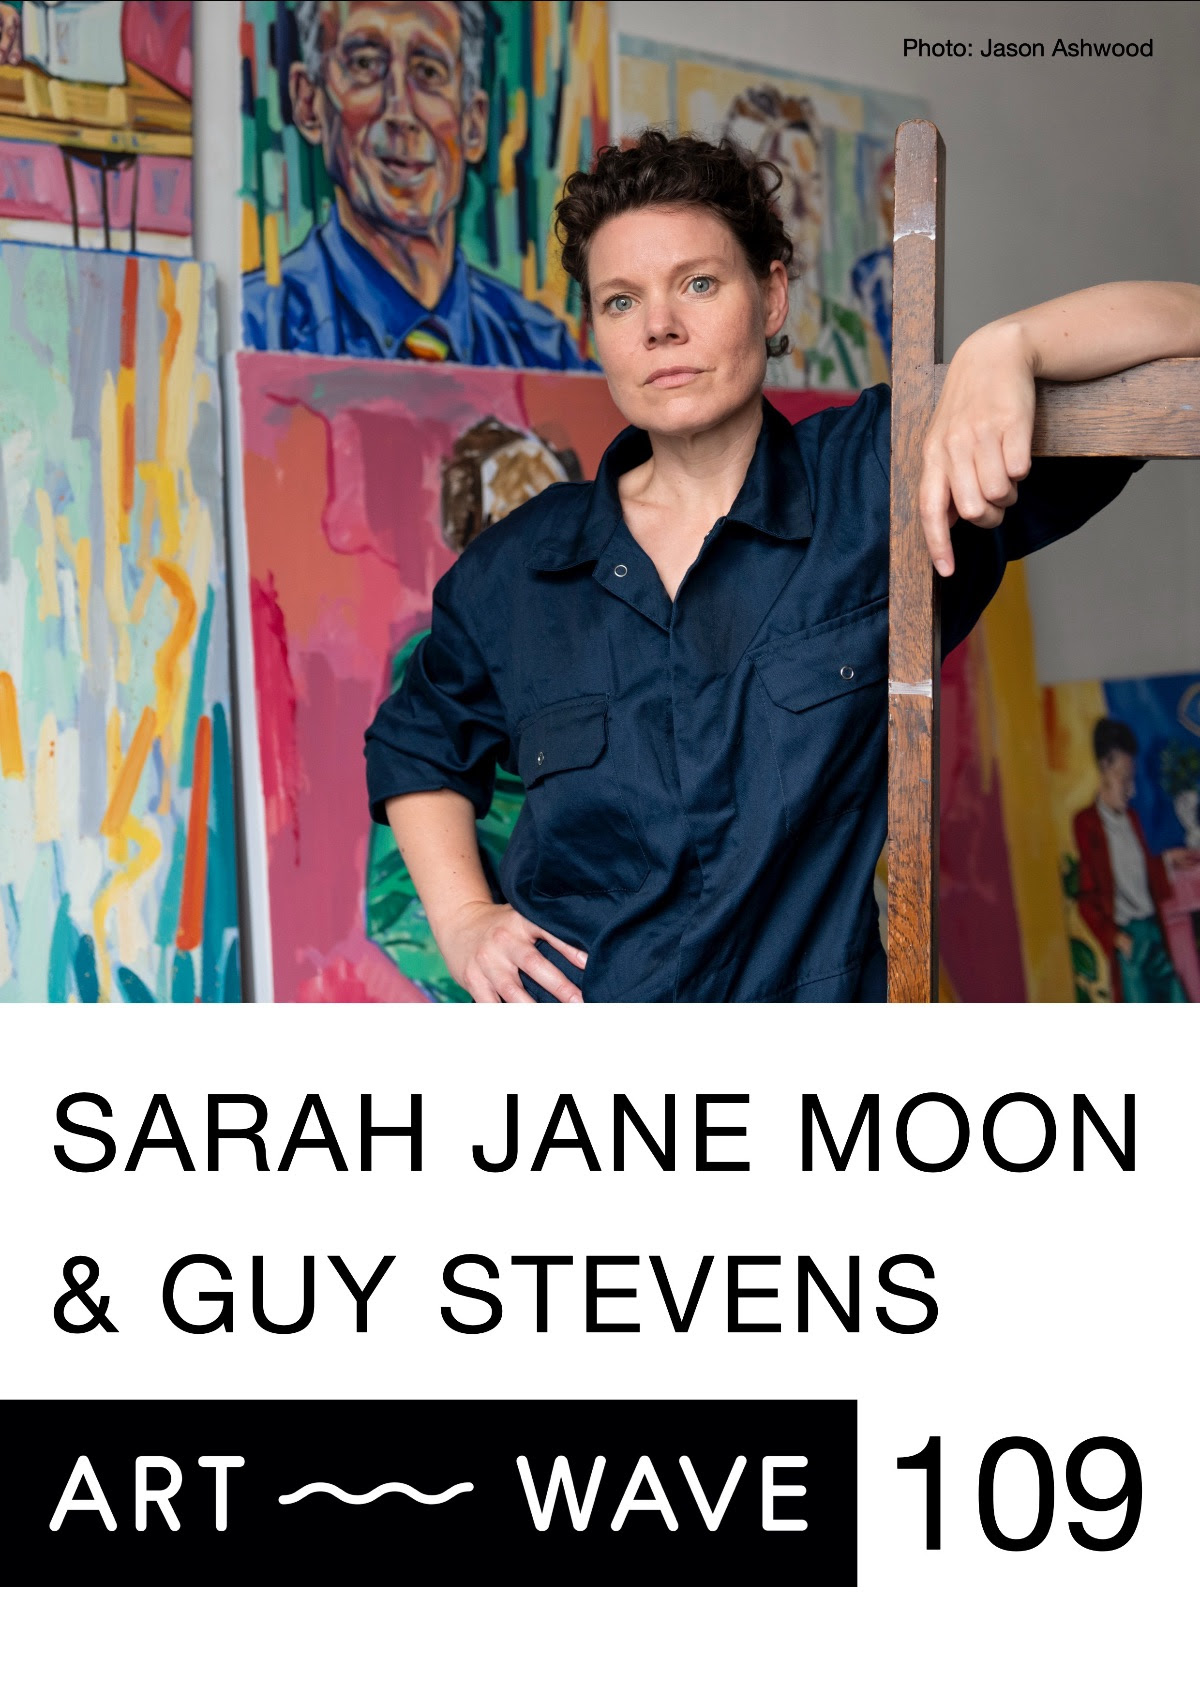 Sarah Jane Moon & Guy Stevens in Lewes, UK